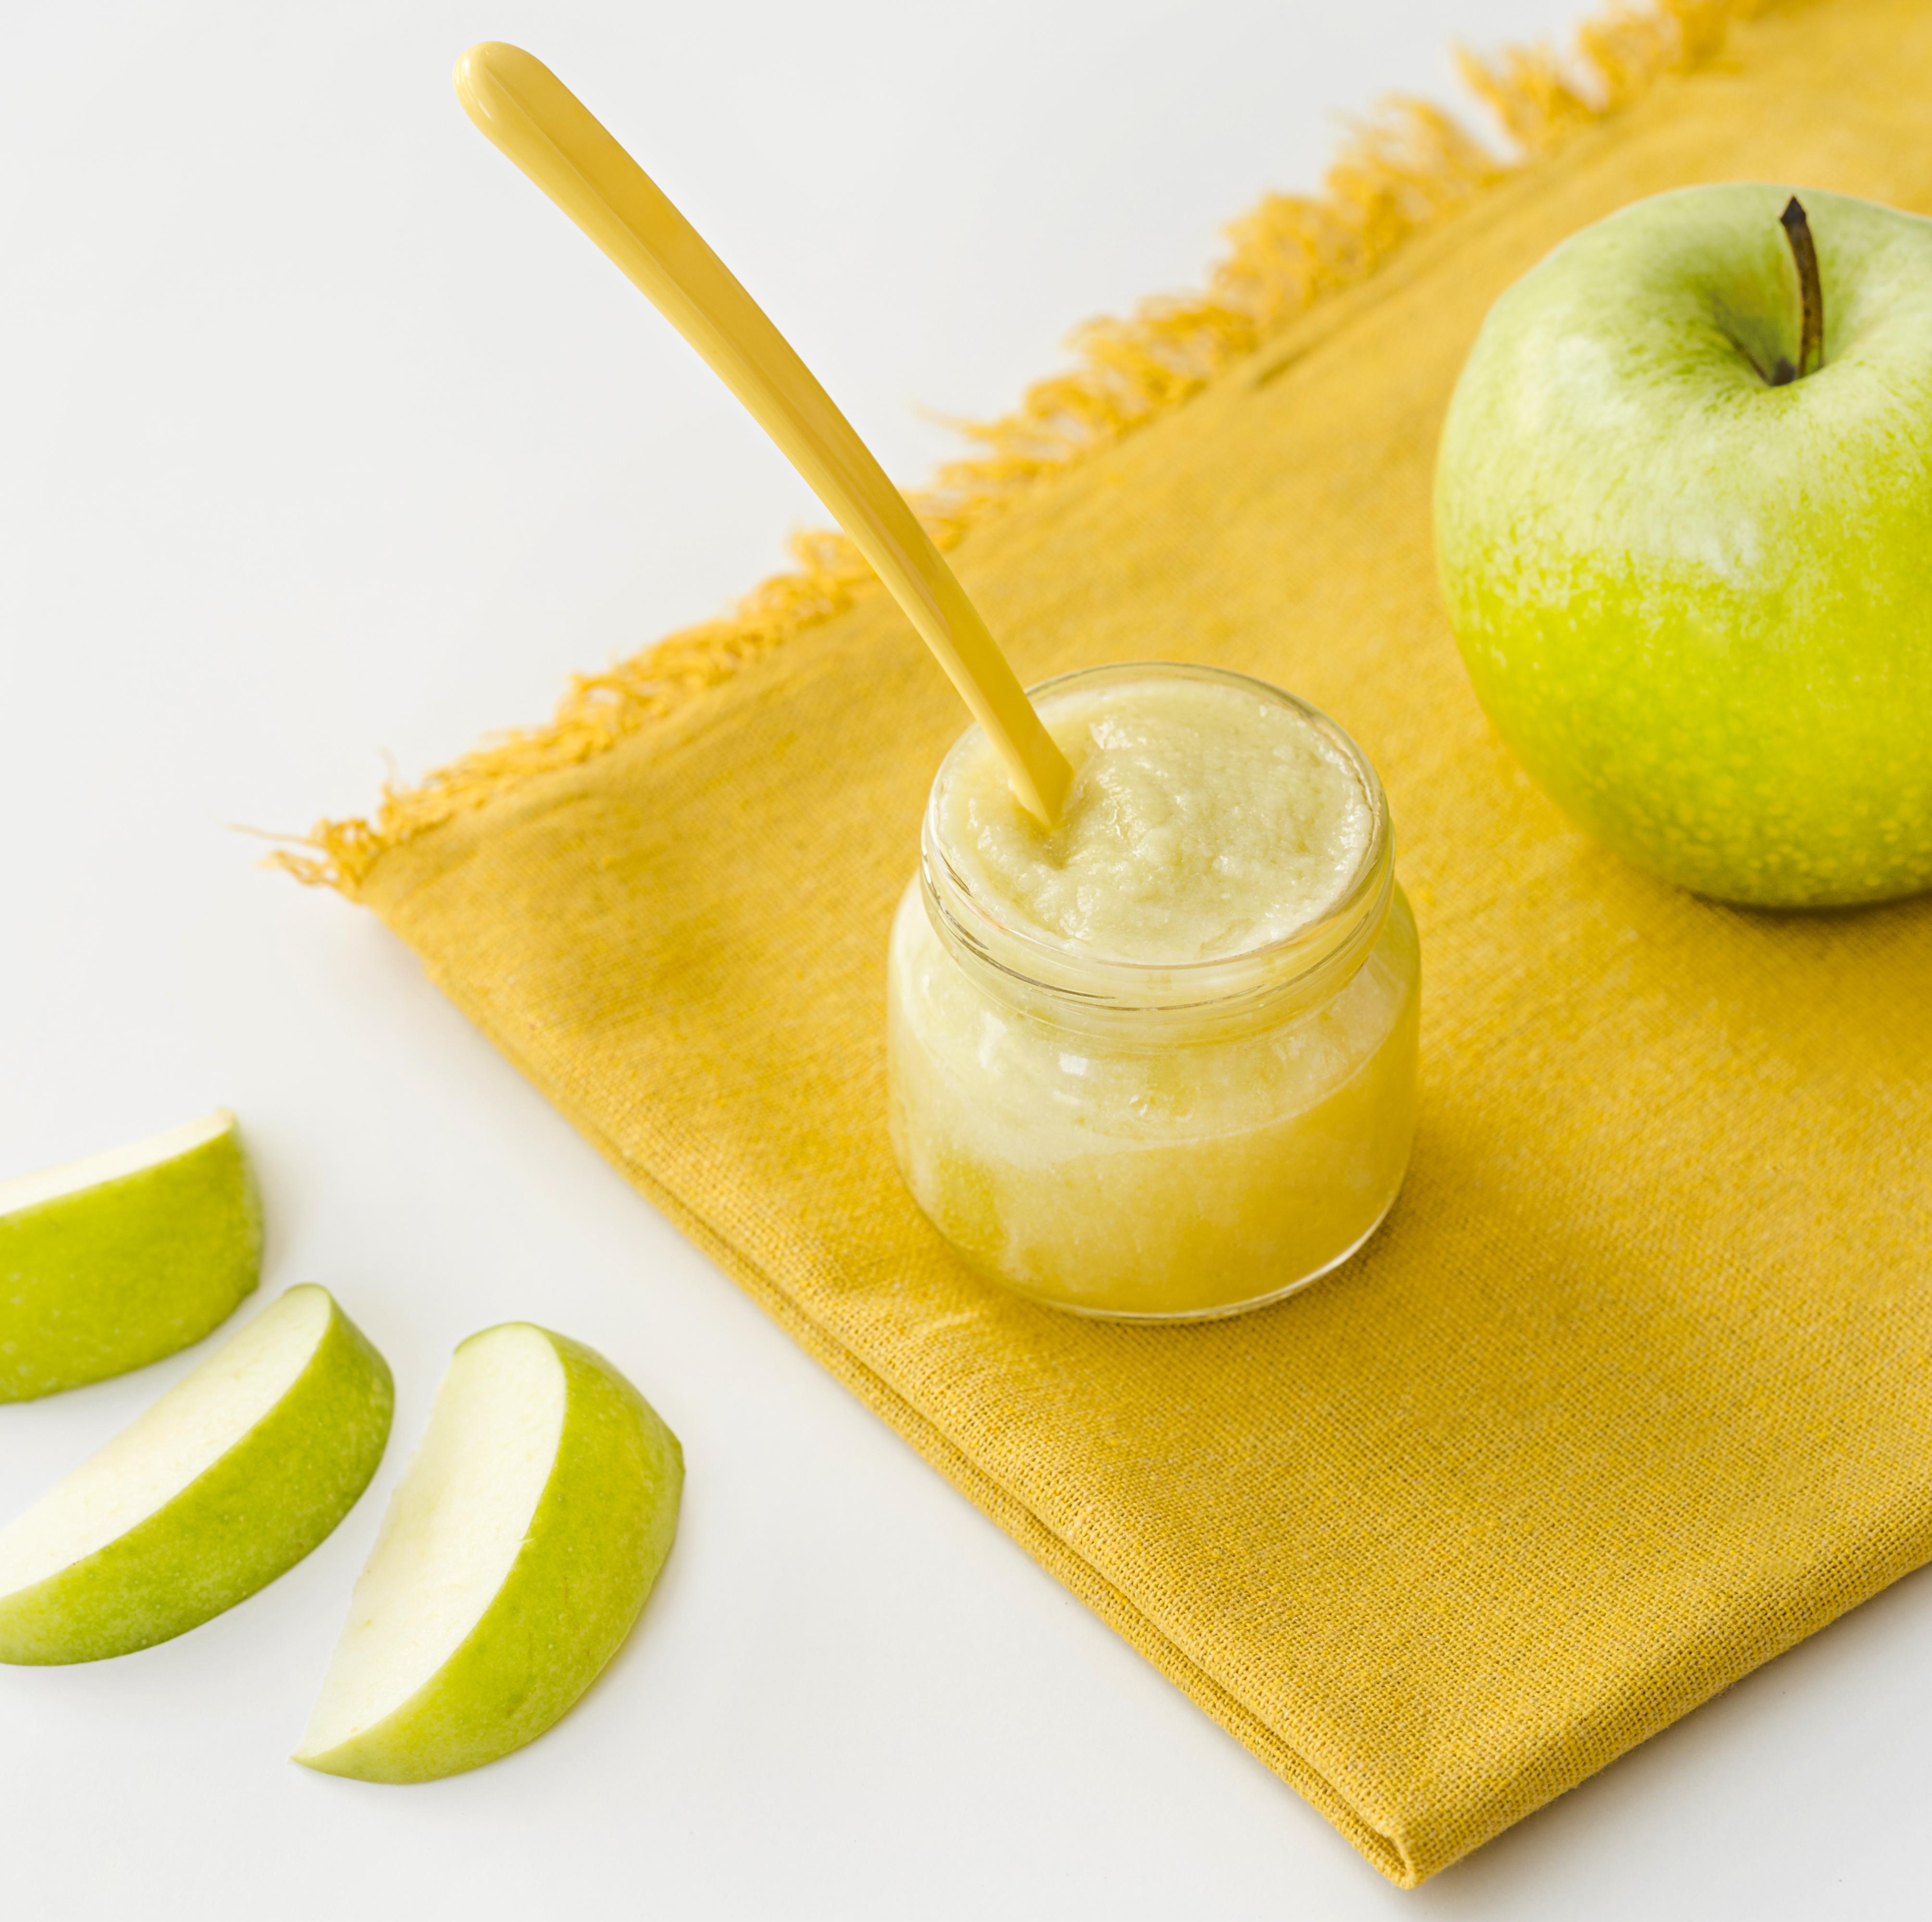 Apple and pear homogenized